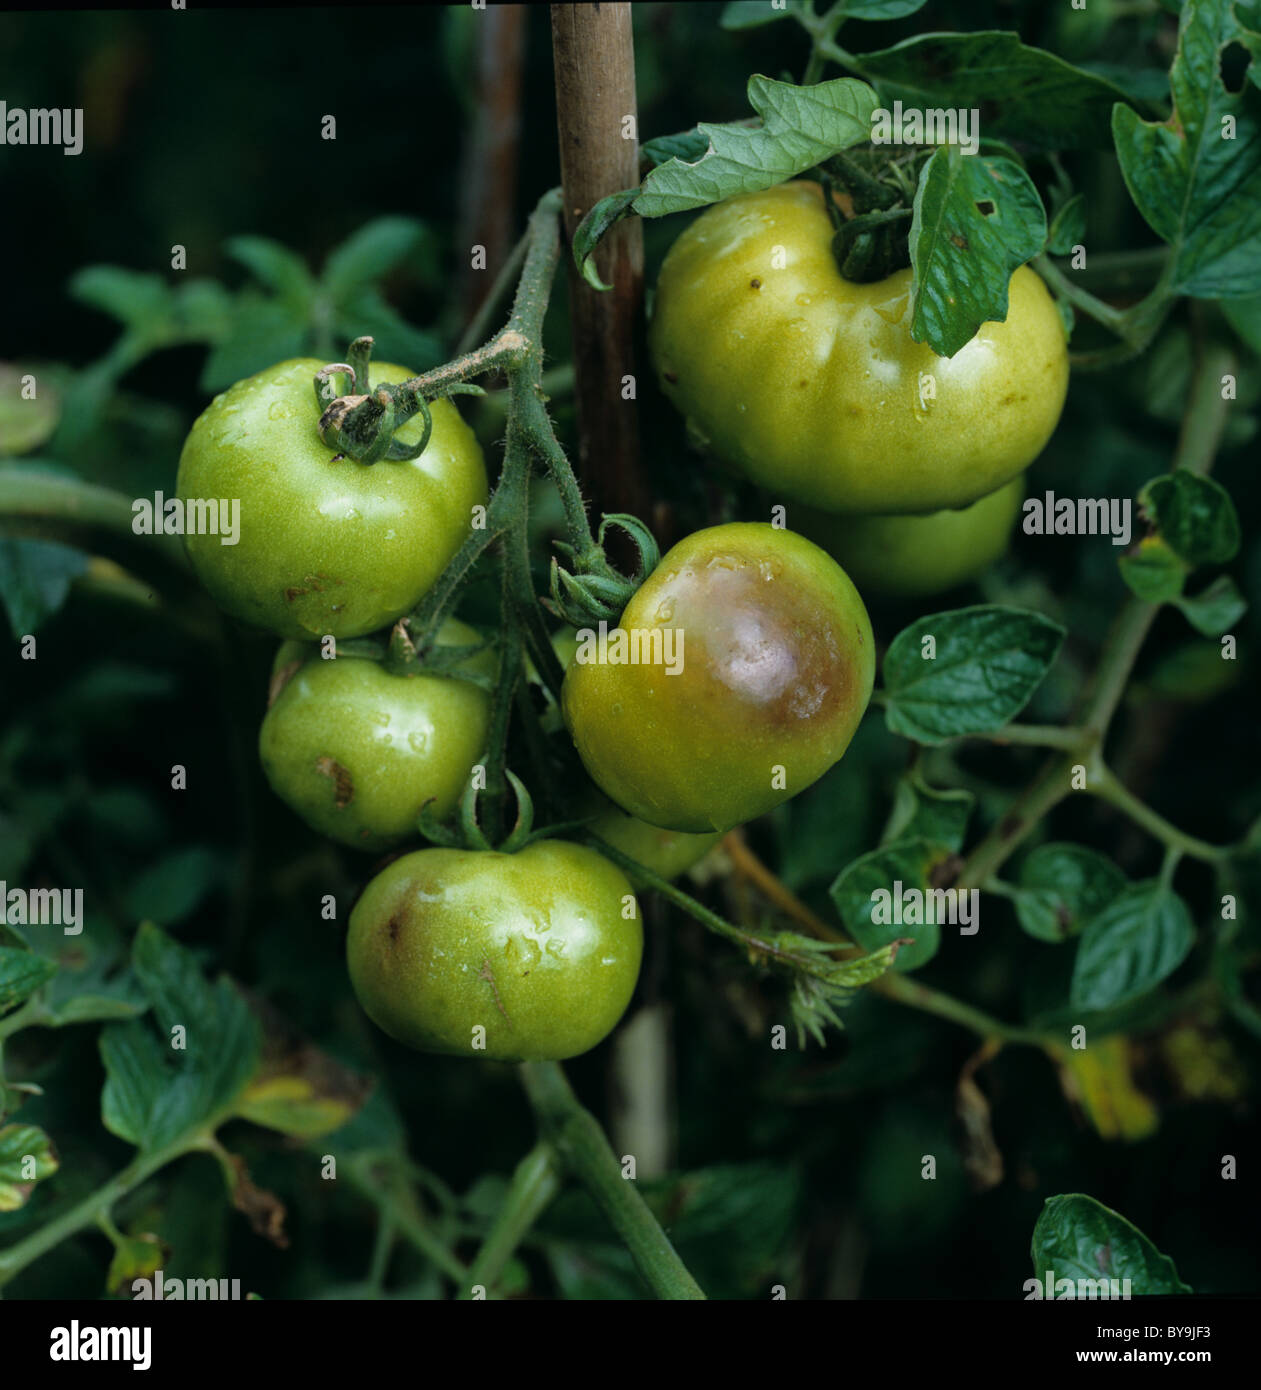 Tomate el tizón tardío (Phytophthora infestans) Daños en invernaderos de tomates verdes Foto de stock